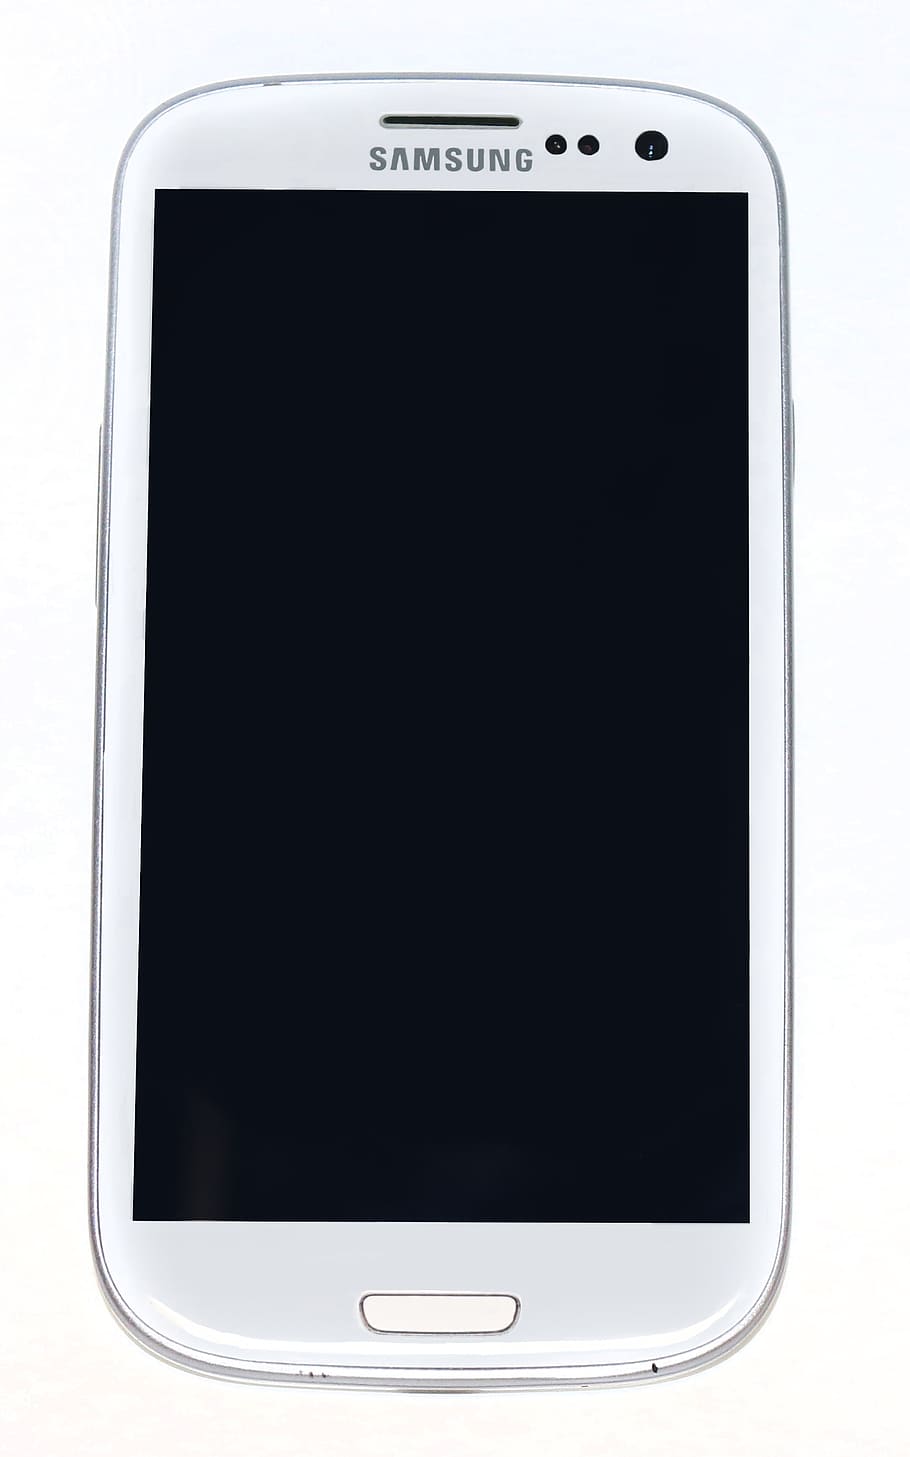 putih, smartphone samsung galaxy, samsung galaxy s3, smartphone, ponsel, telepon, nirkabel, mockup, telepon pintar terisolasi, teknologi